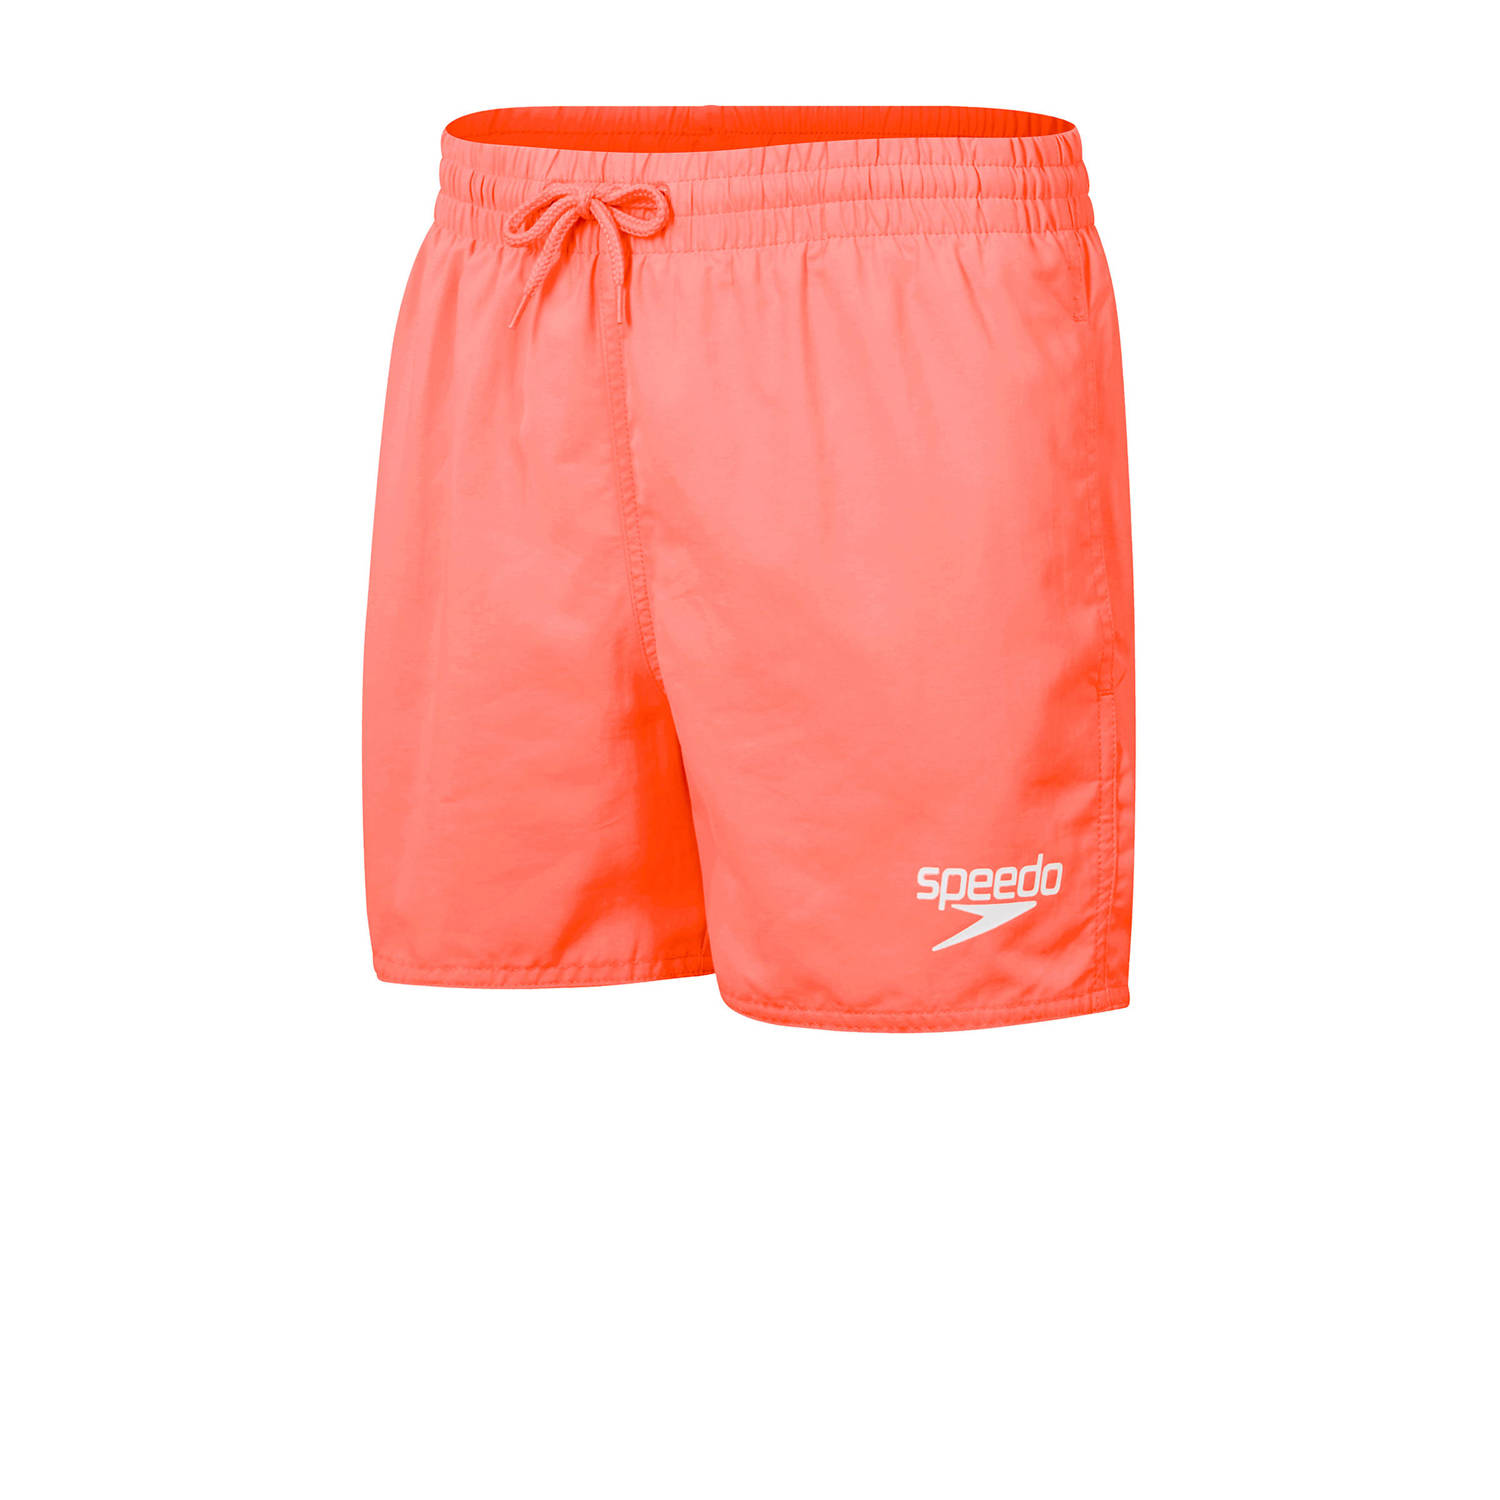 Speedo zwemshort neon oranje